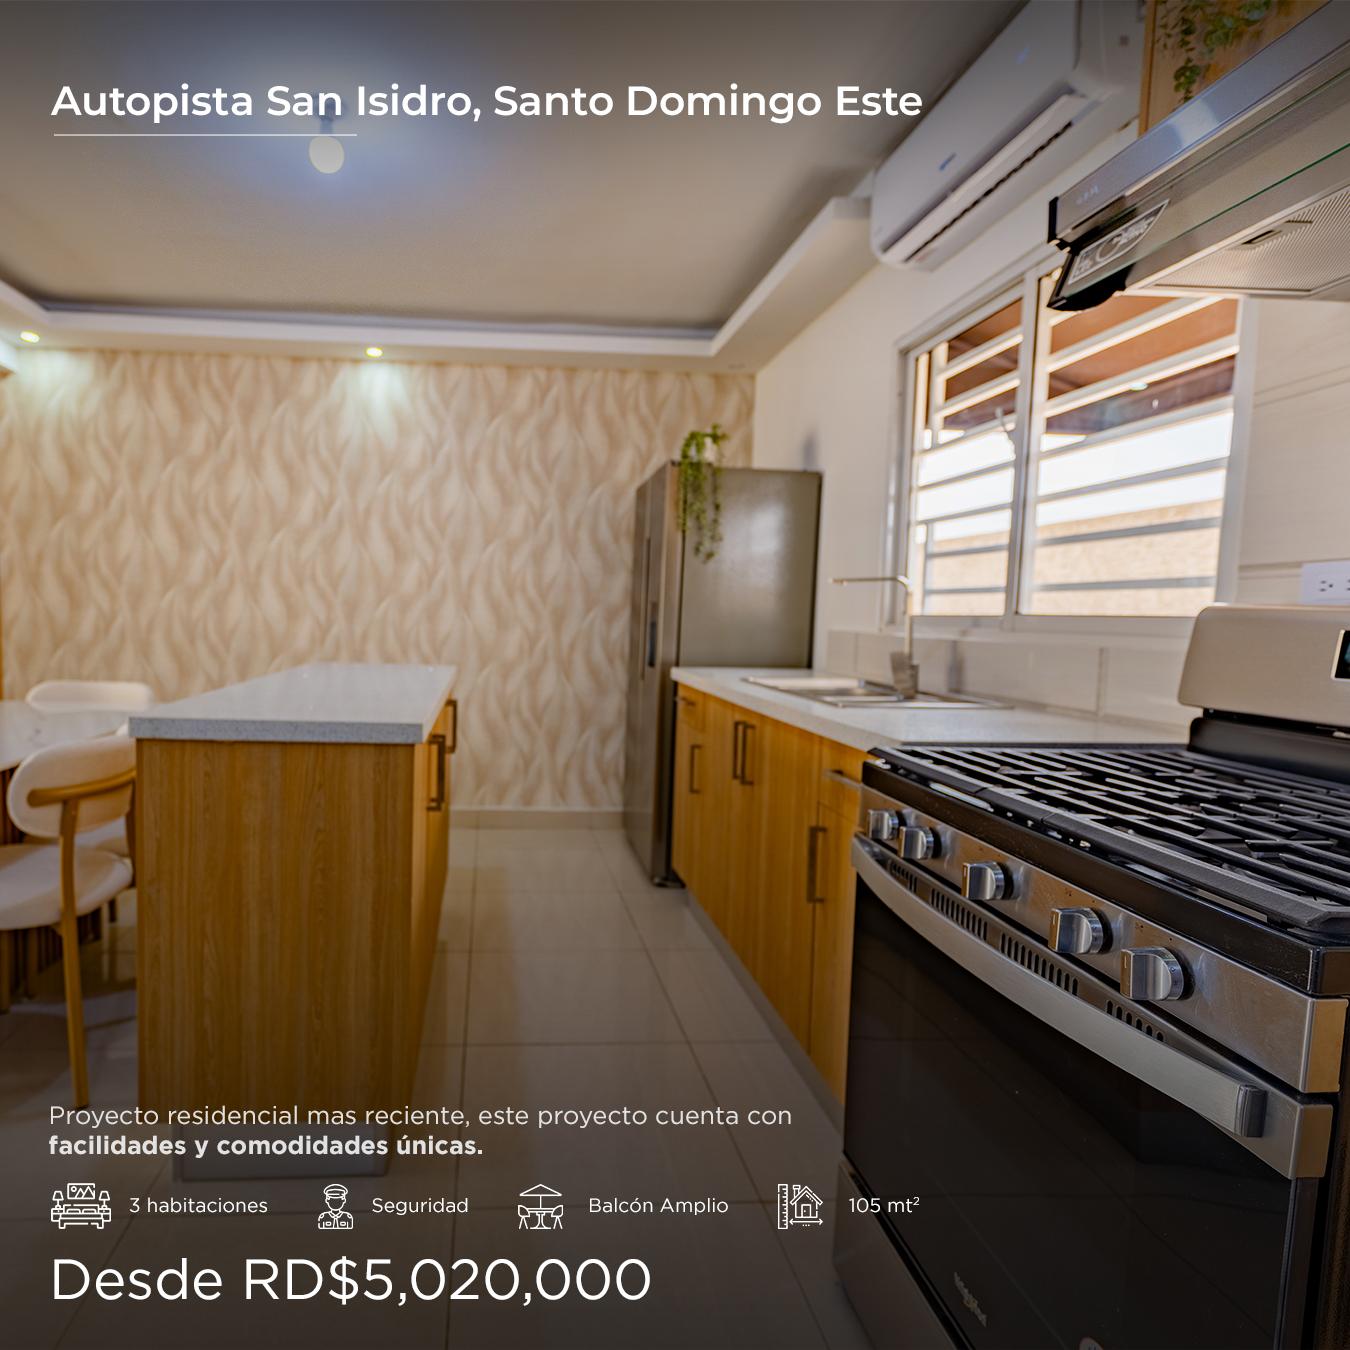 Apartamentos en venta en Santo Domingo Este Autopista San Isidro Foto 7213996-3.jpg